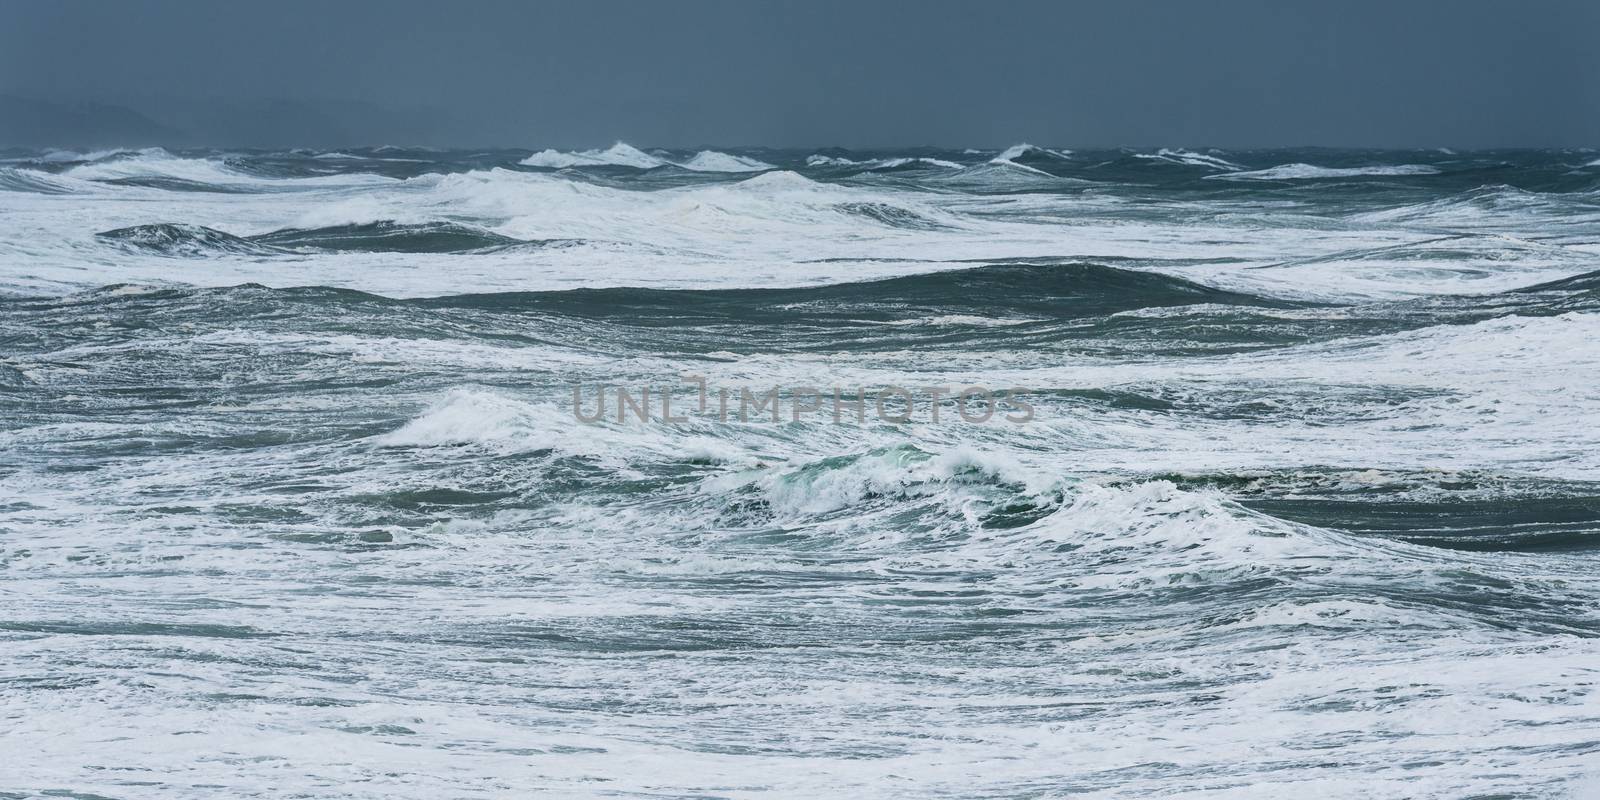 Storm waves in the Atlantic Ocean. Stormy weather in Biarritz, France.